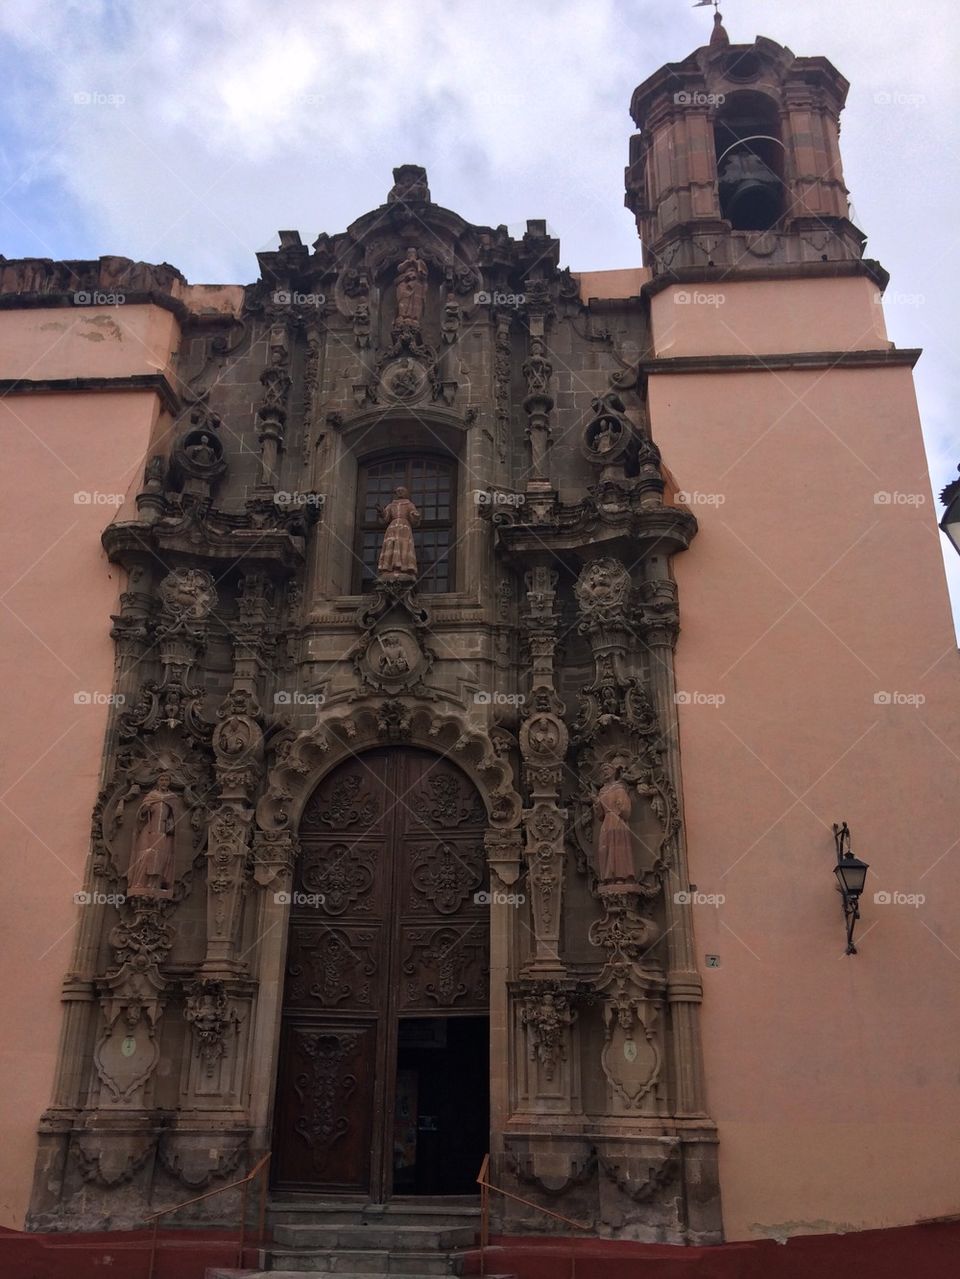 Guanajuato church